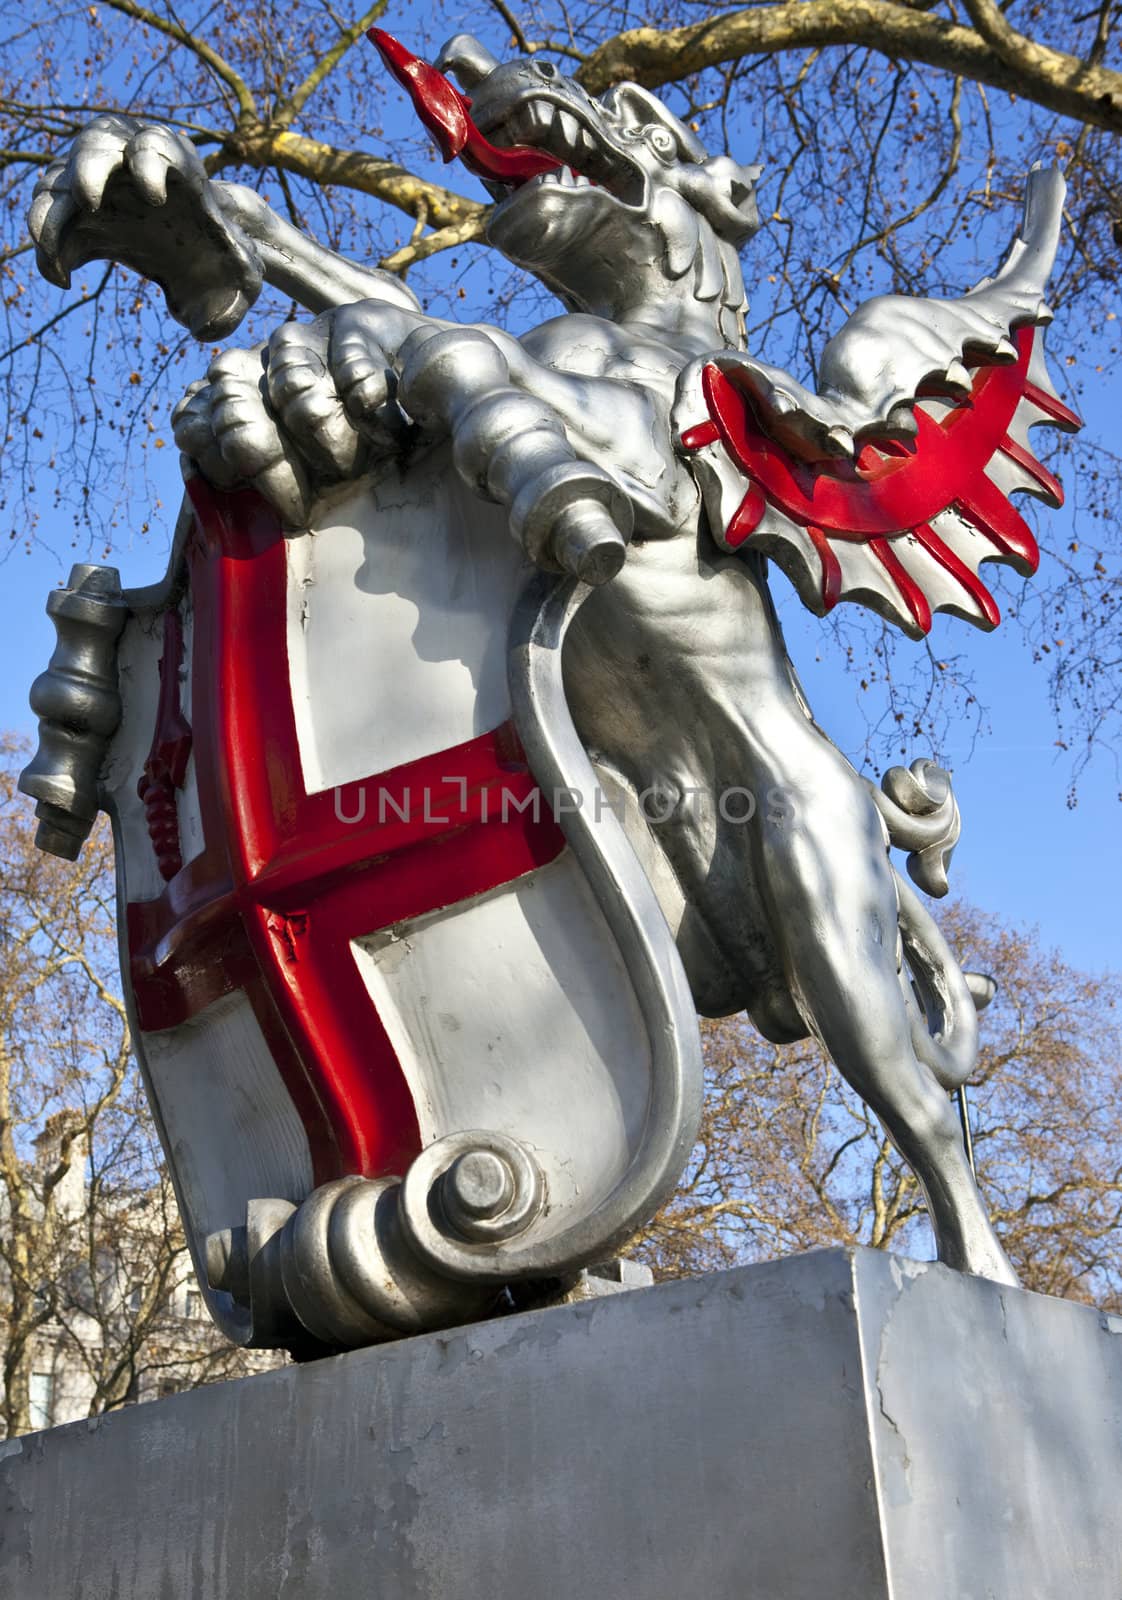 City of London Statue by chrisdorney